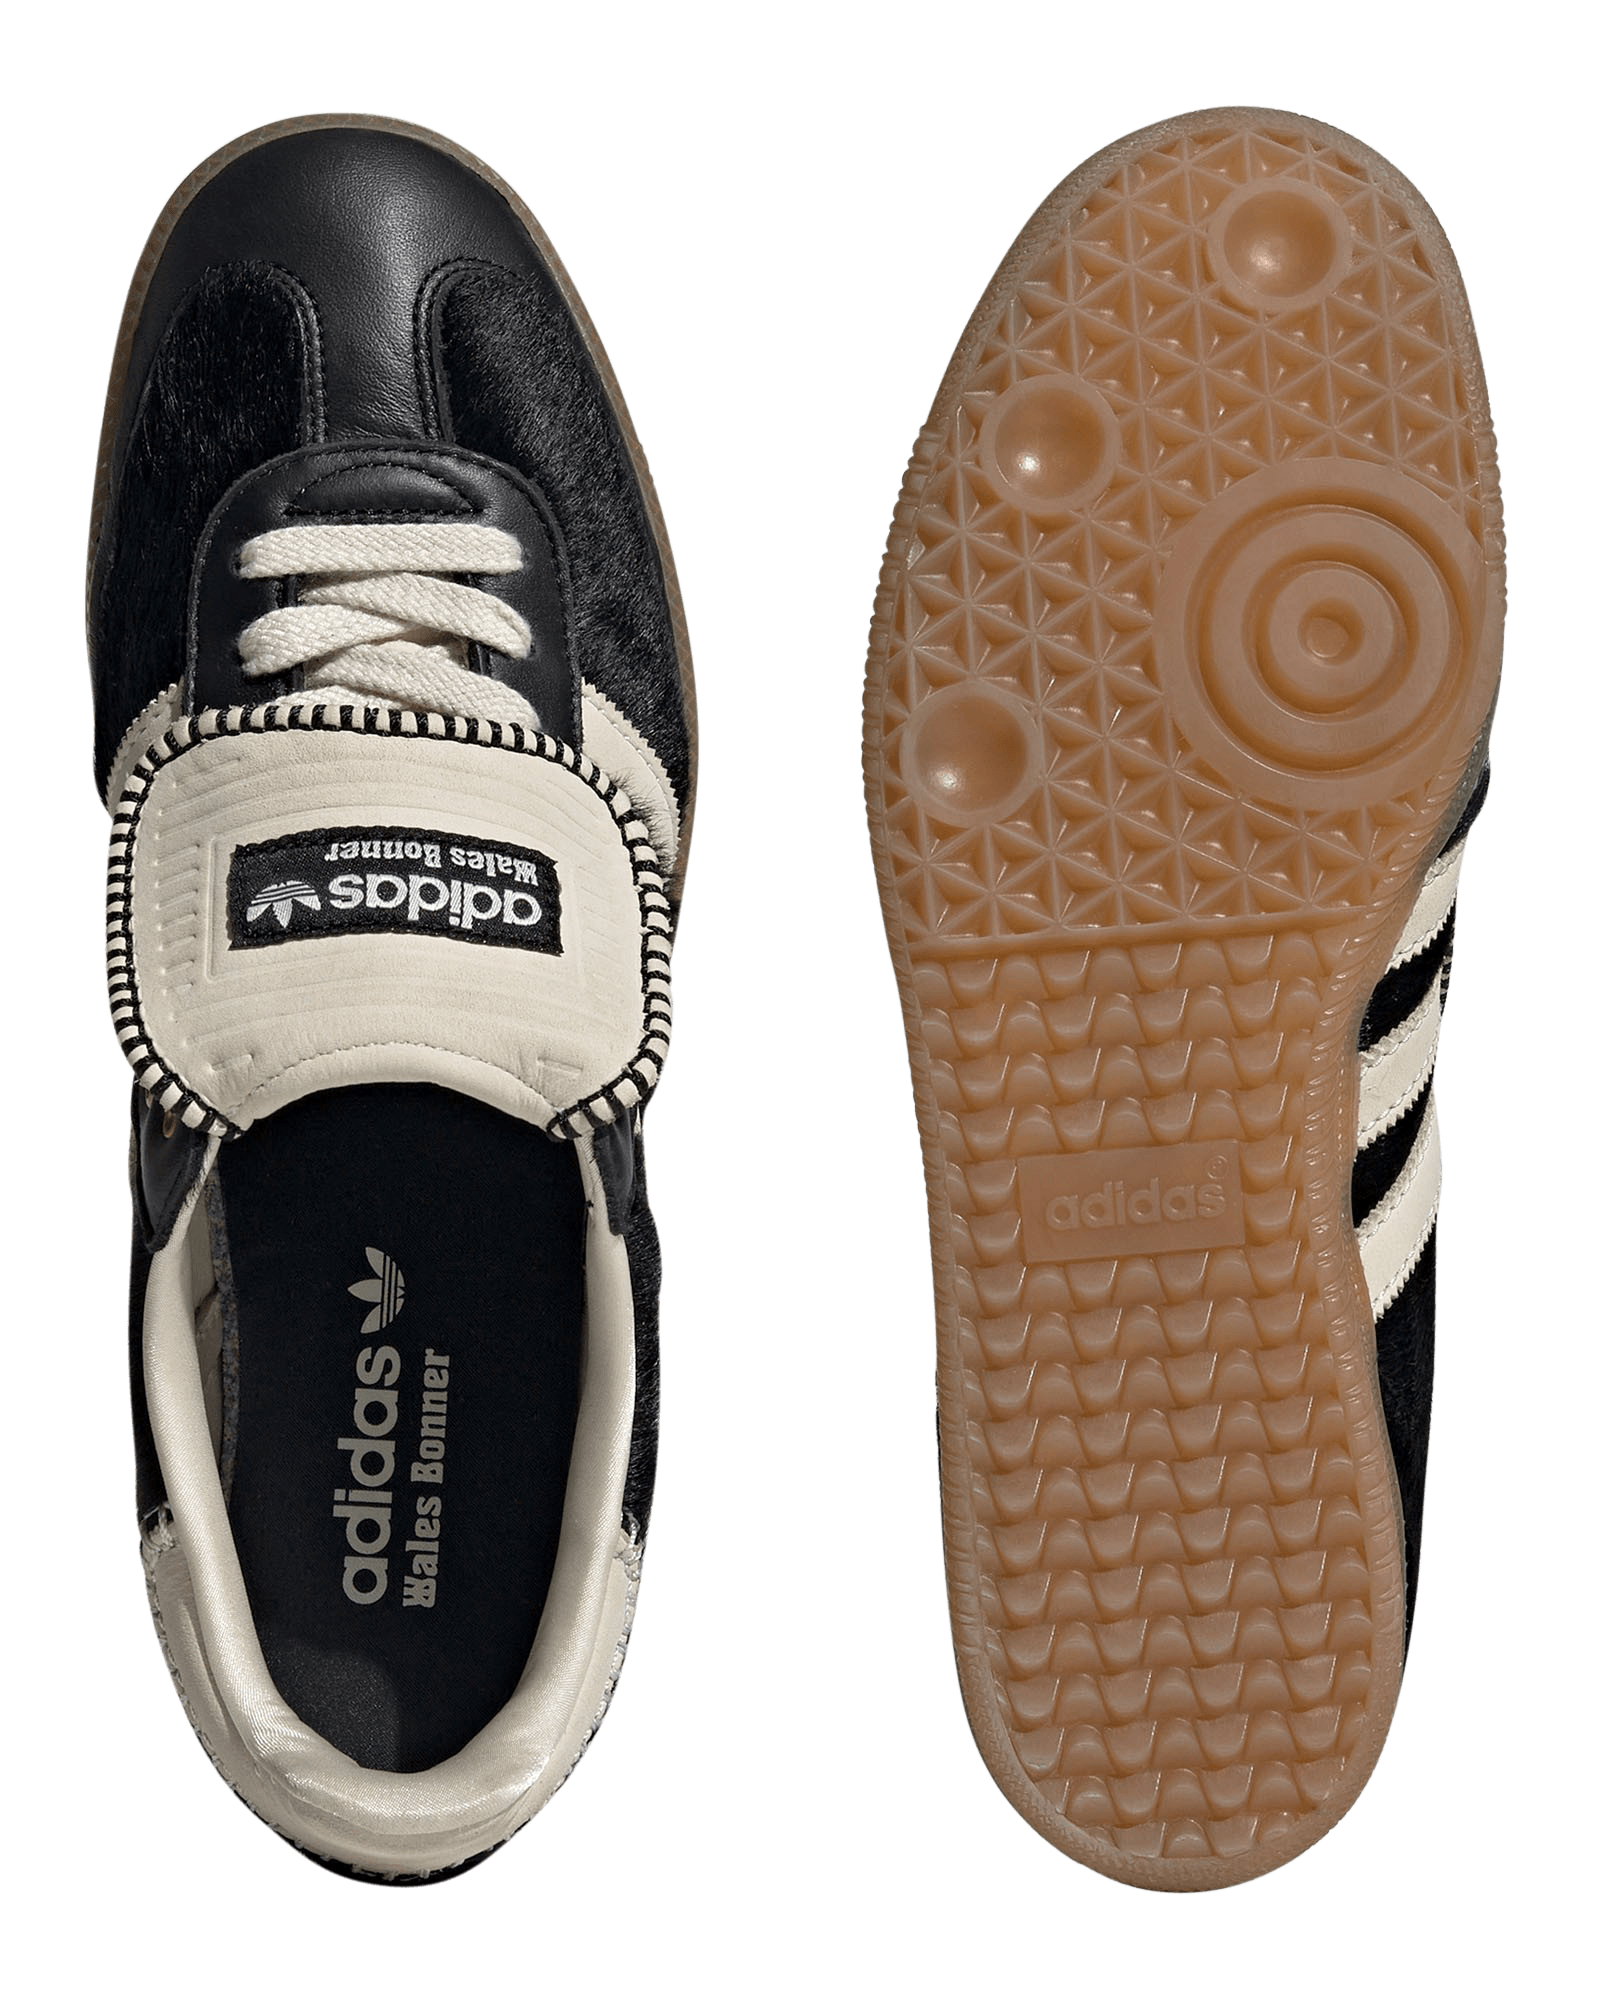 WB Pony Tonal Samba Adidas Consortium Footwear Sneakers Black